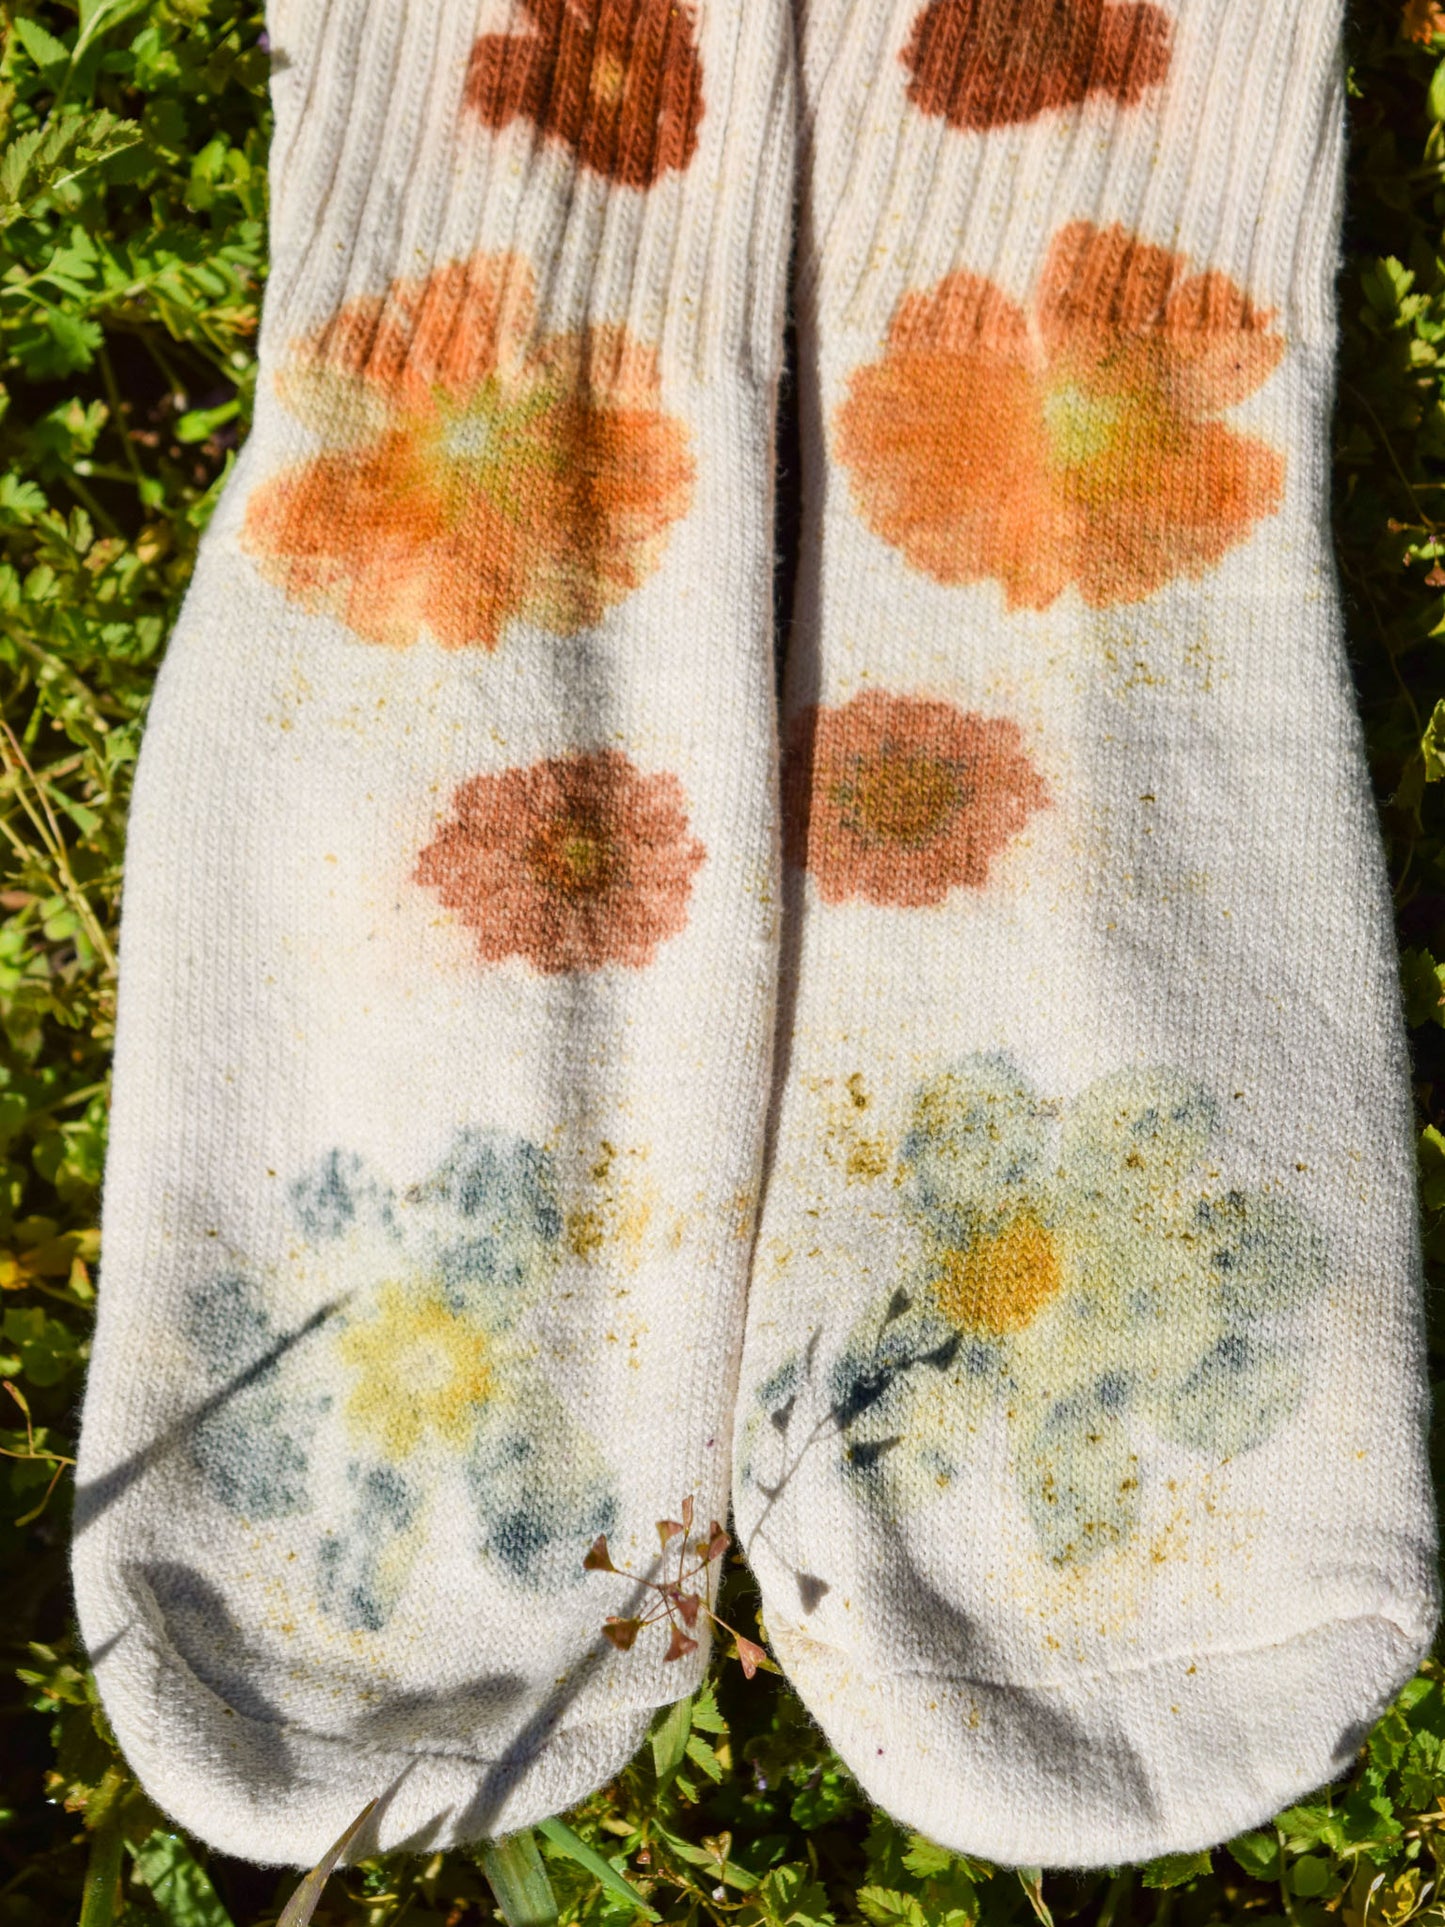 Garden Socks in Speckled Marigold